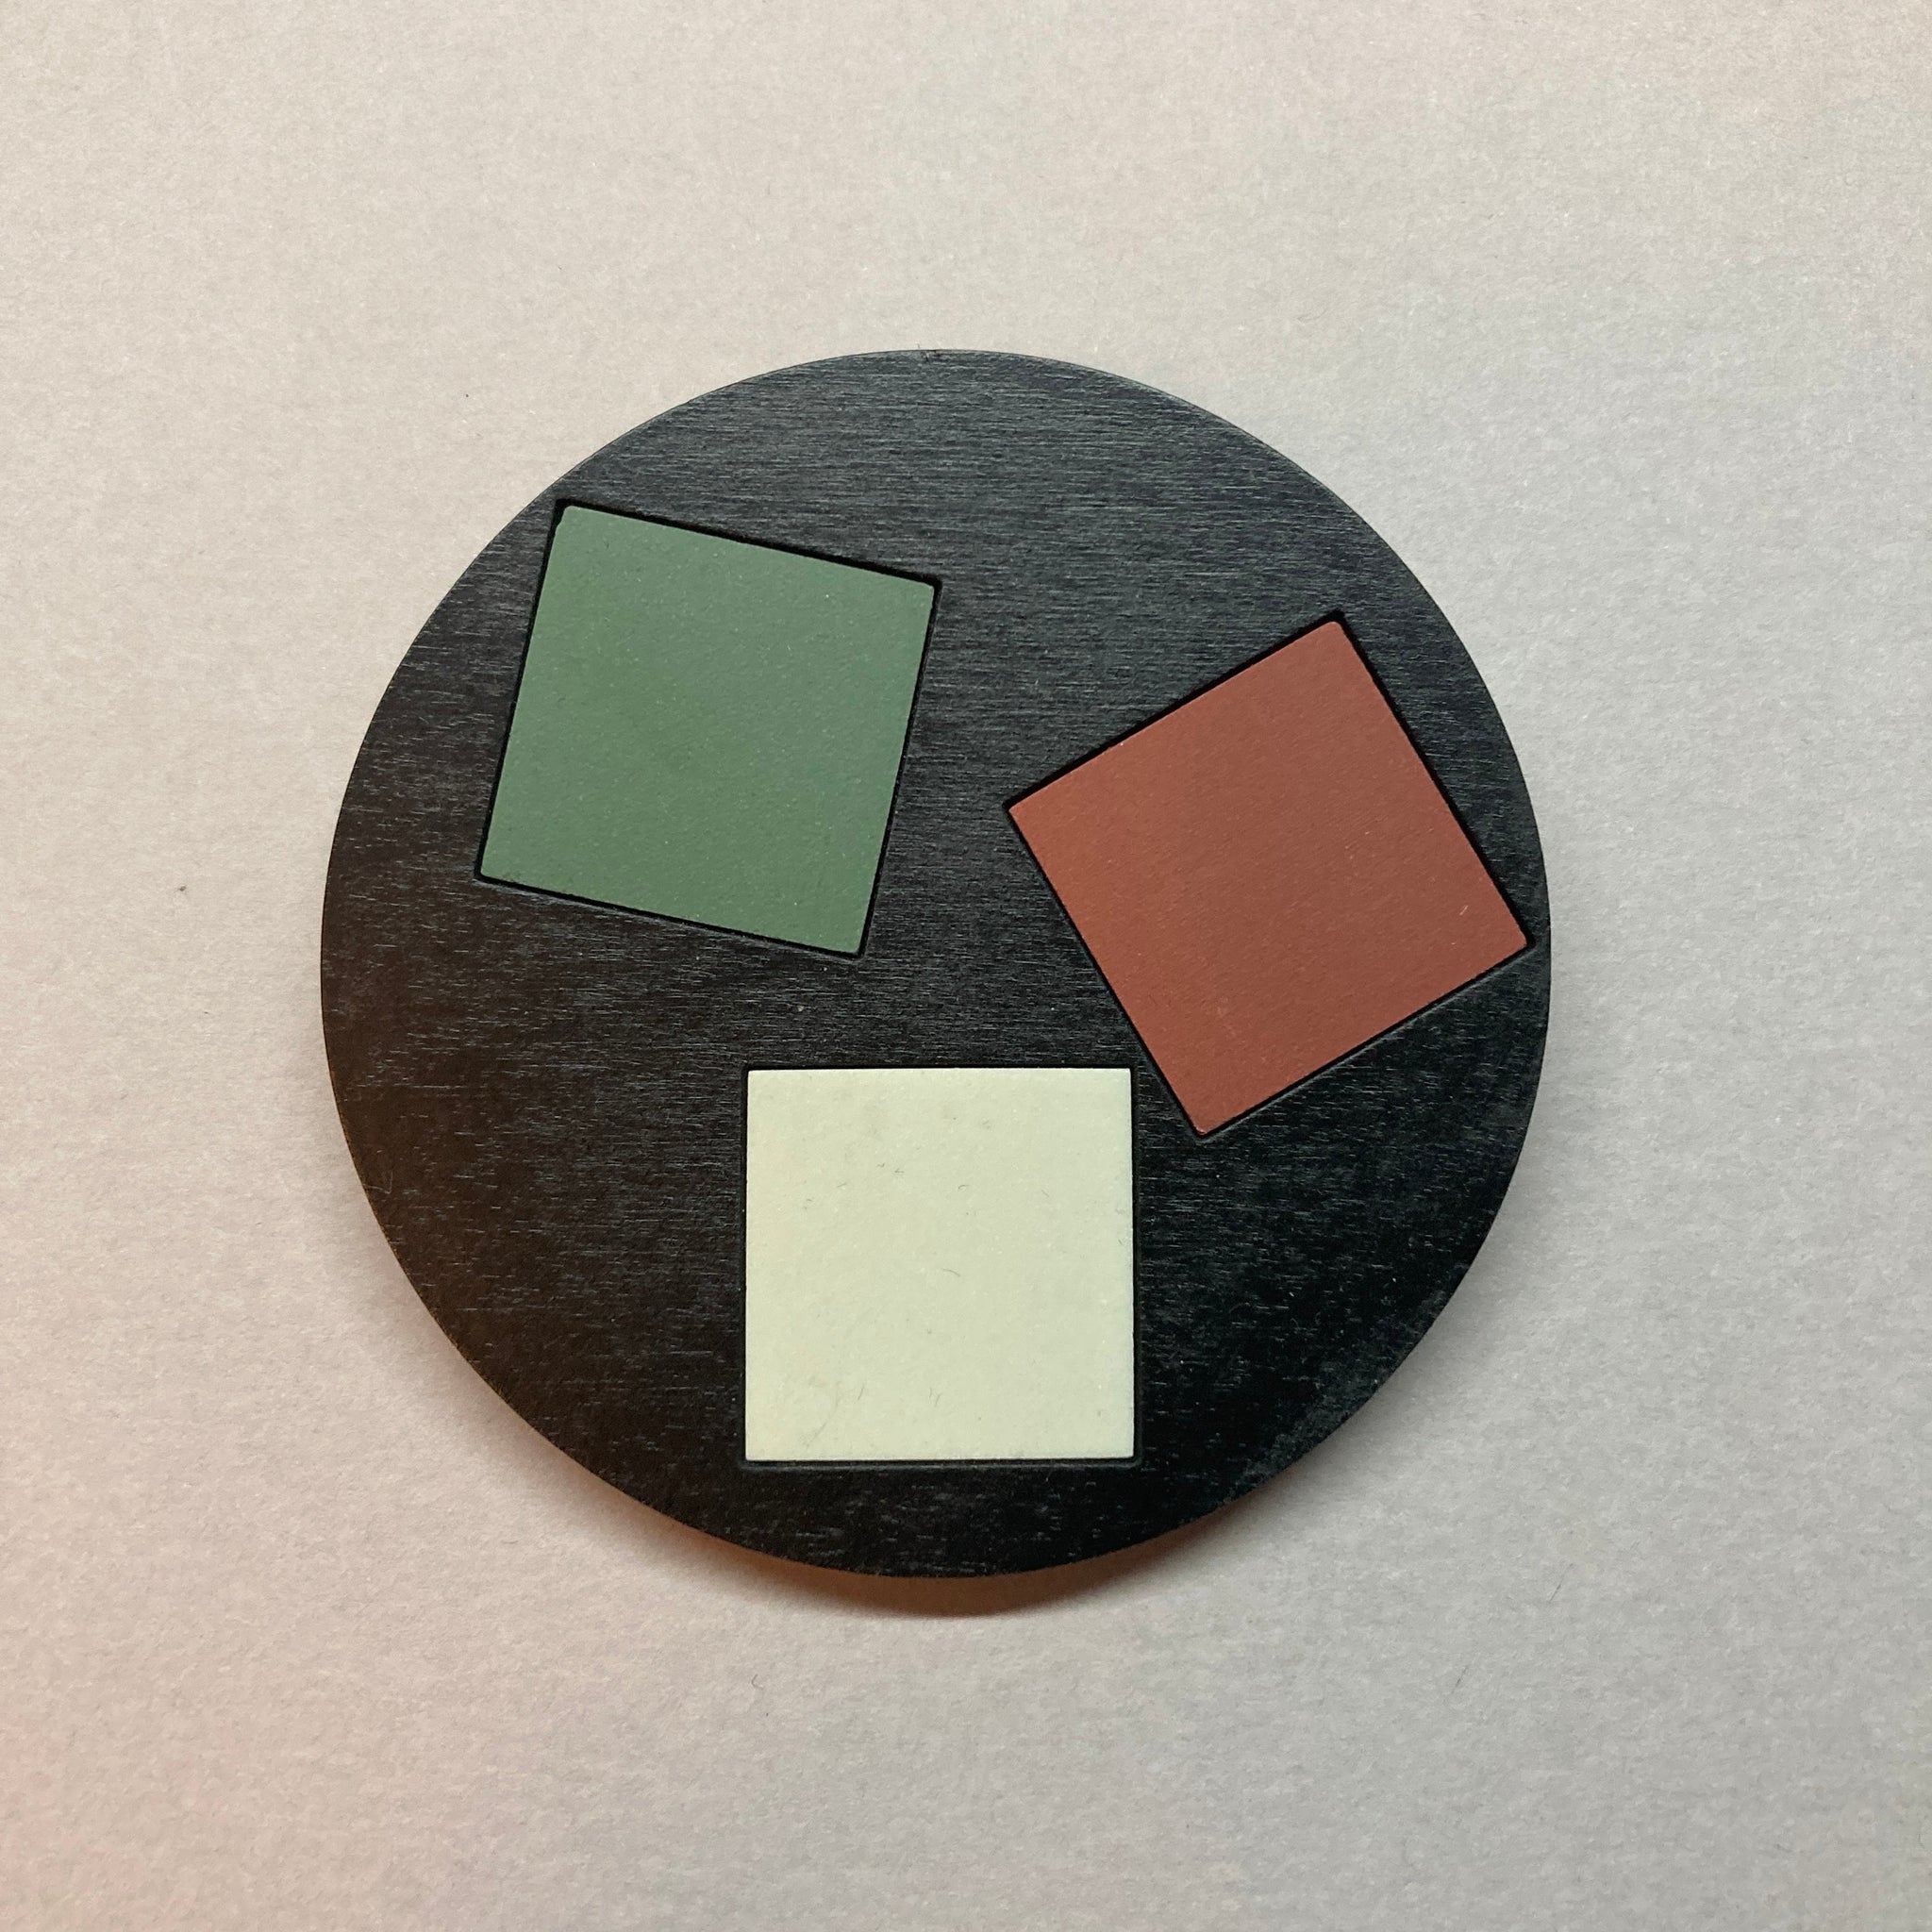 Sample tiled brooch